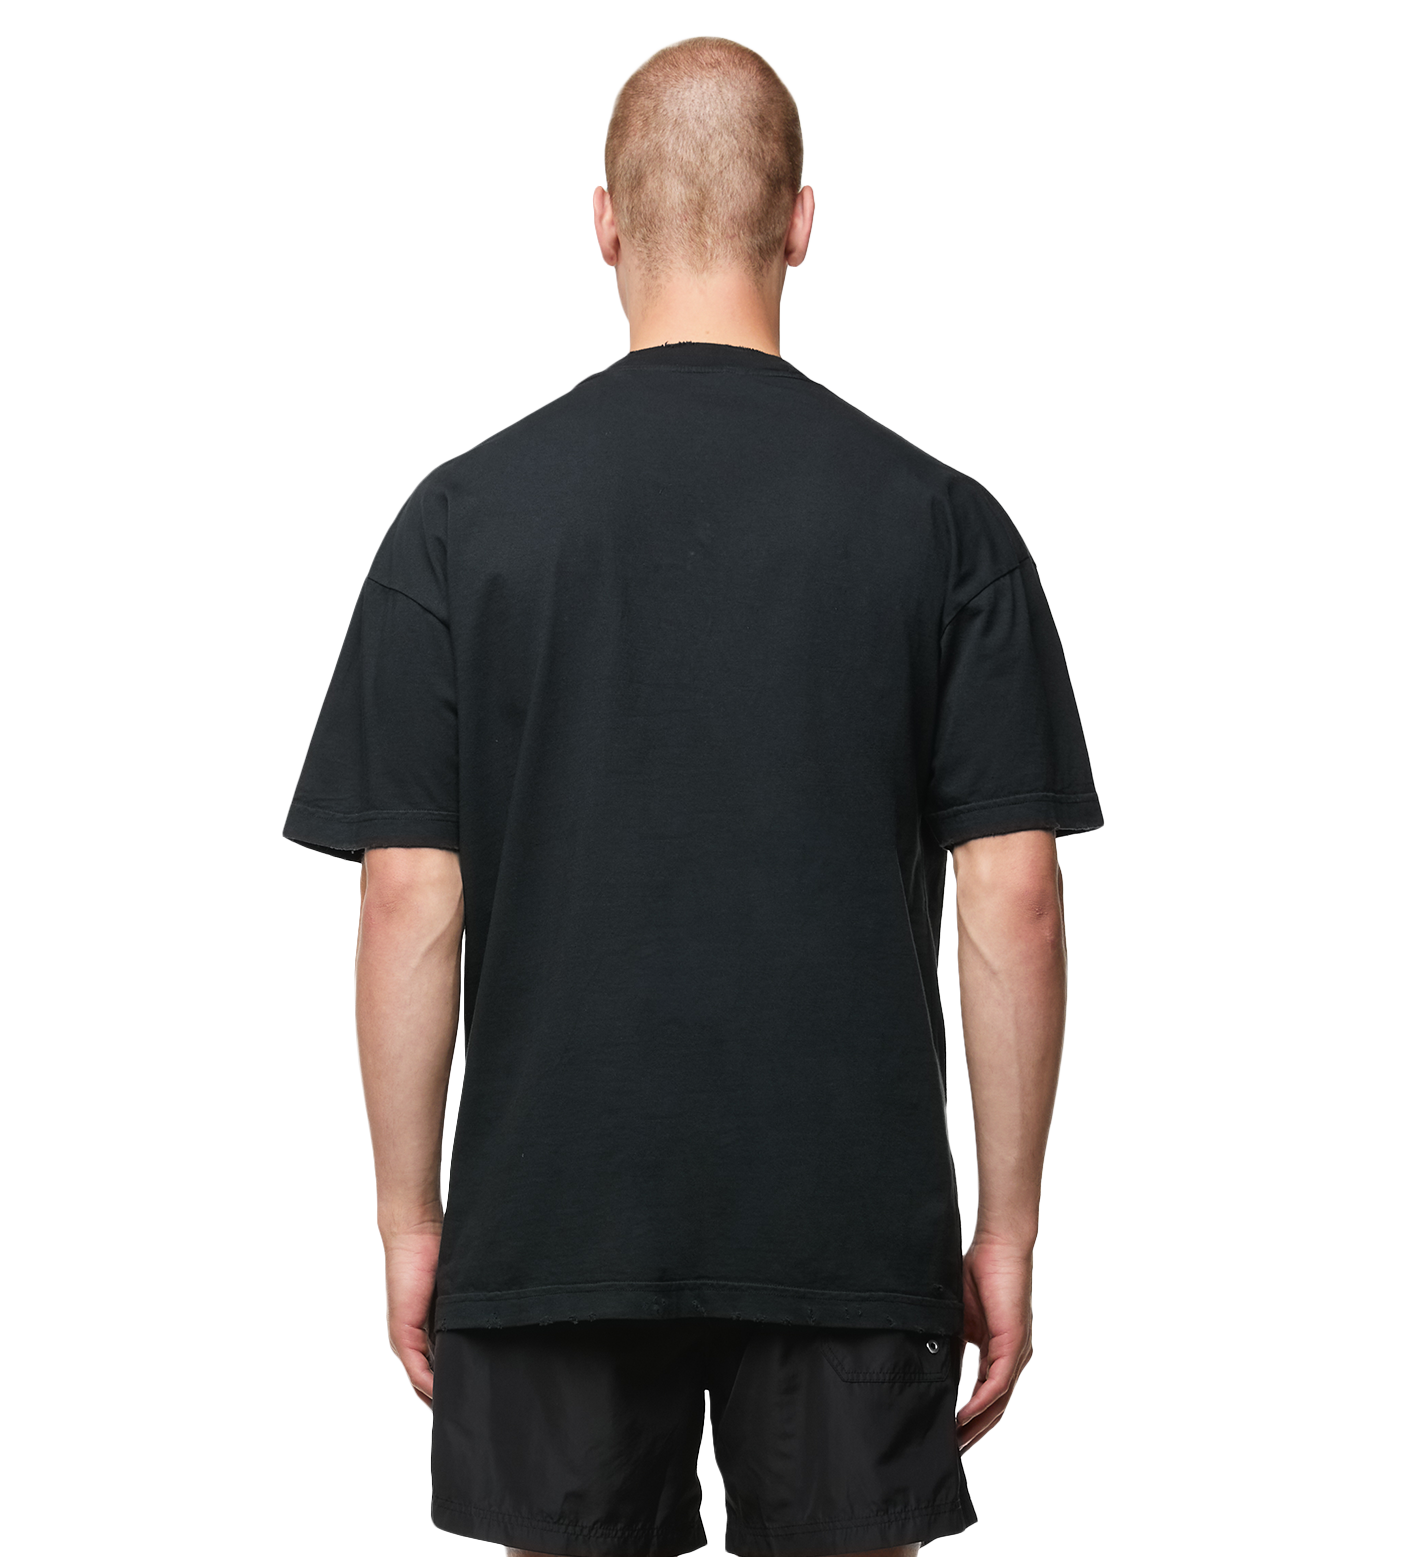 Palm Concert Print T-shirt Black